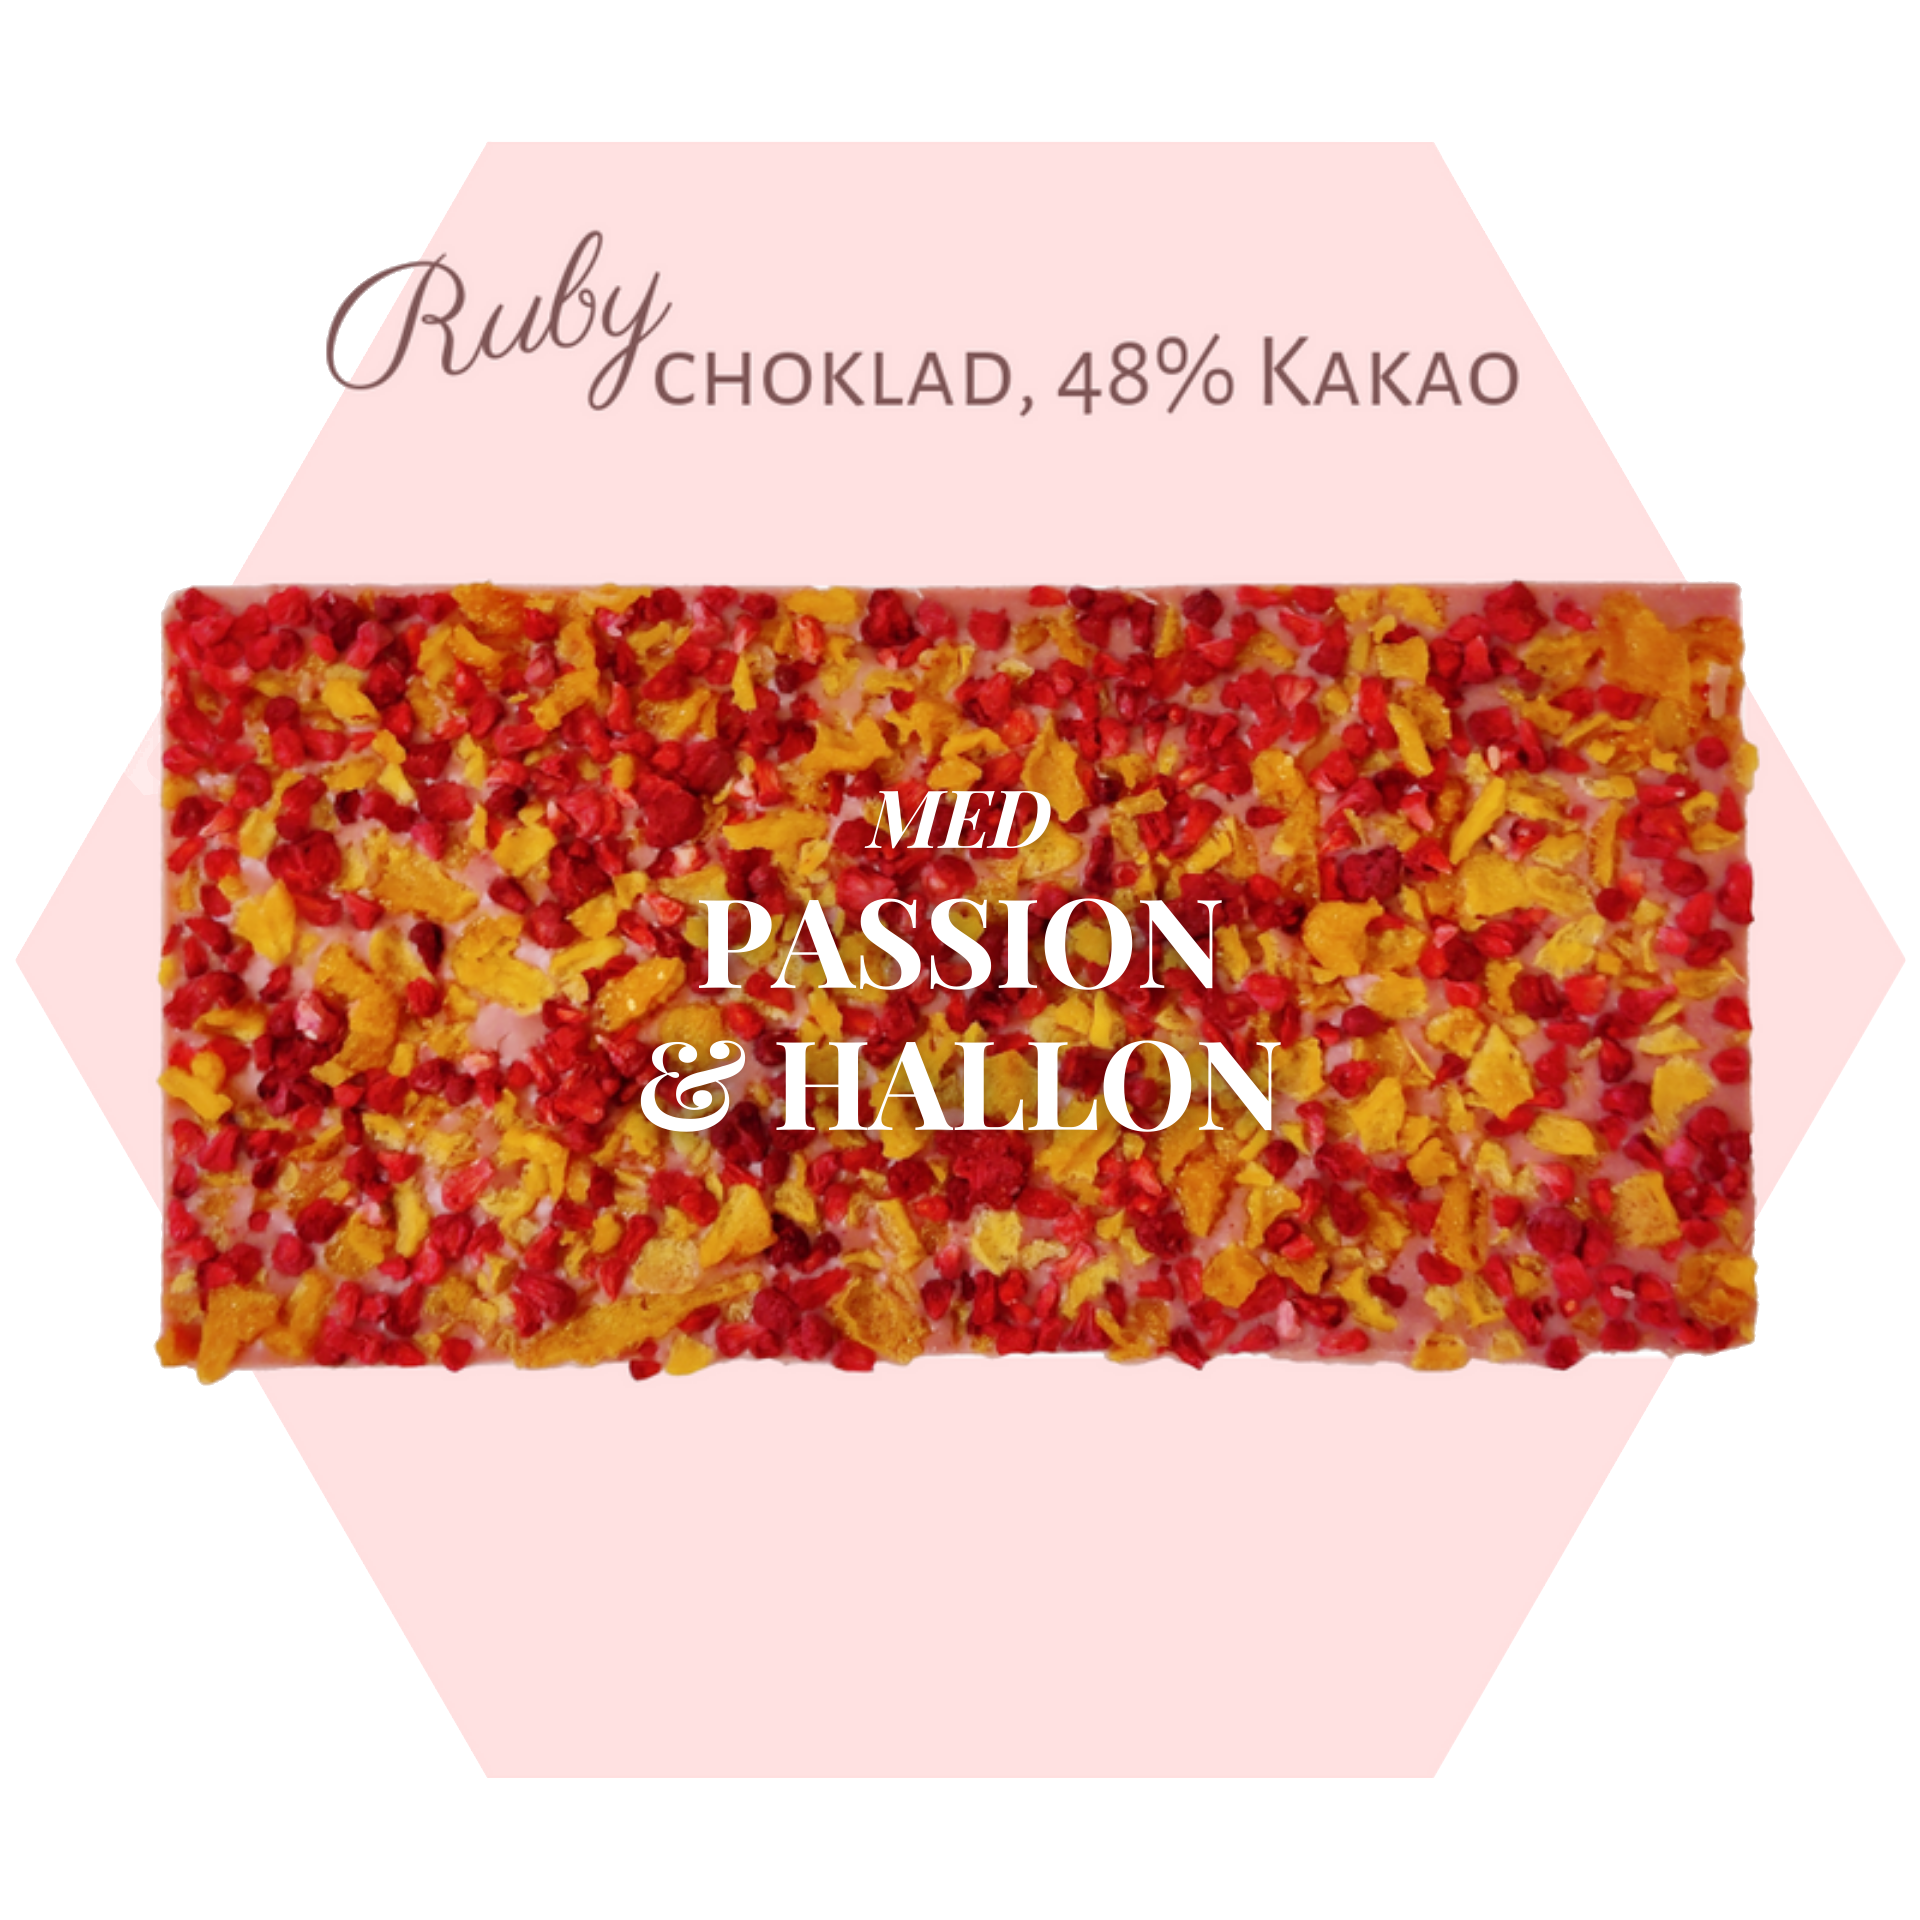 Pralinhuset - Ruby choklad - Passionsfrukt & Hallon